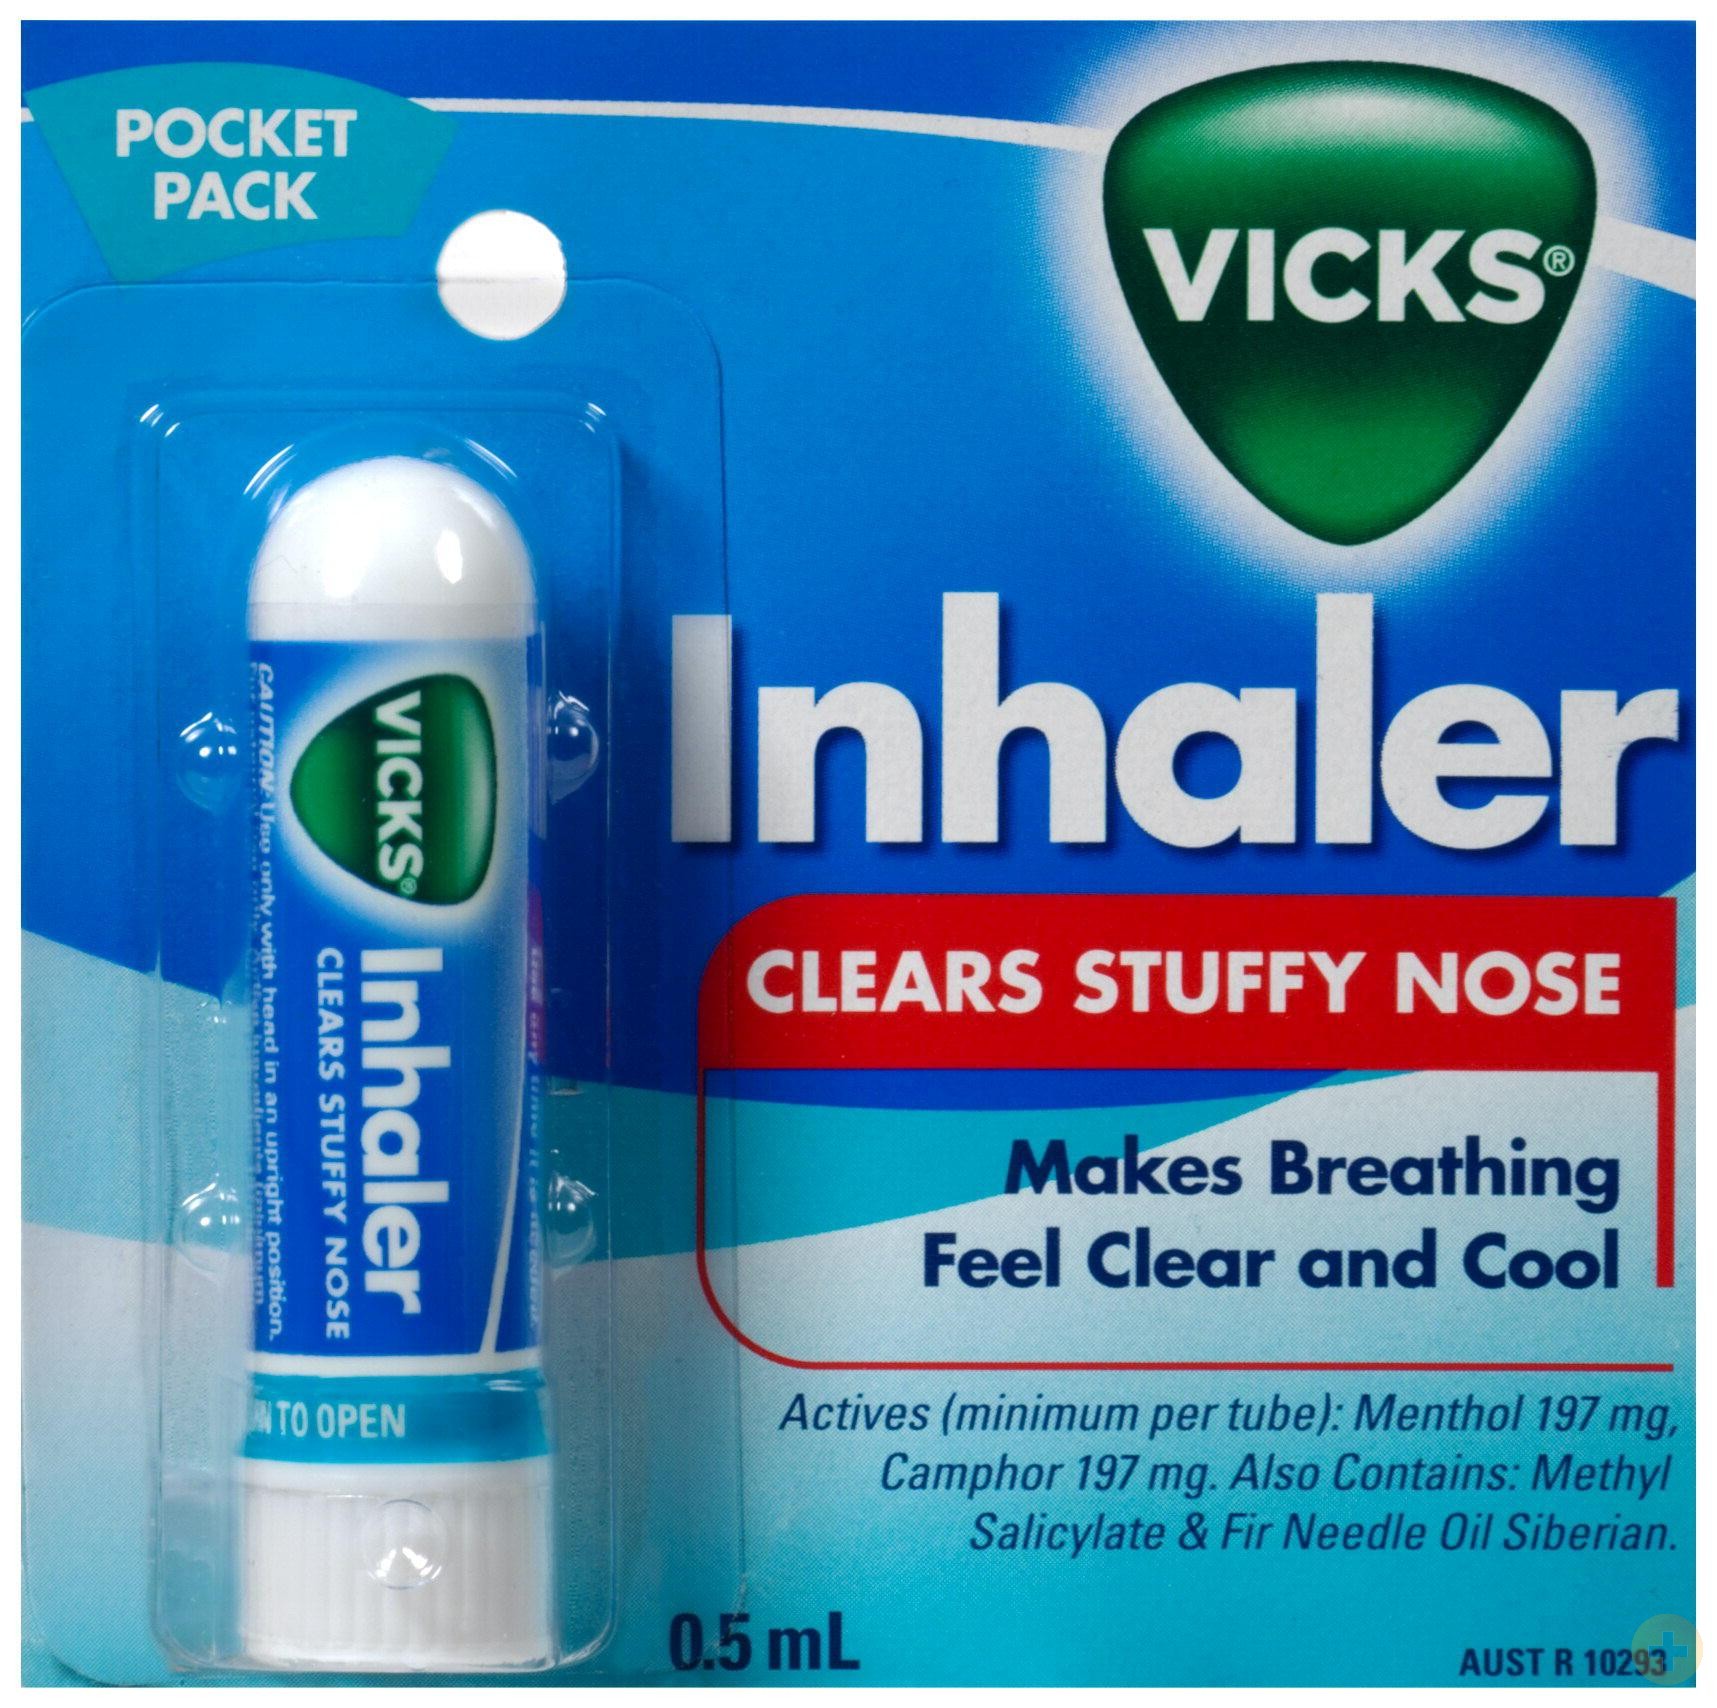 Vicks Pocket Inhaler